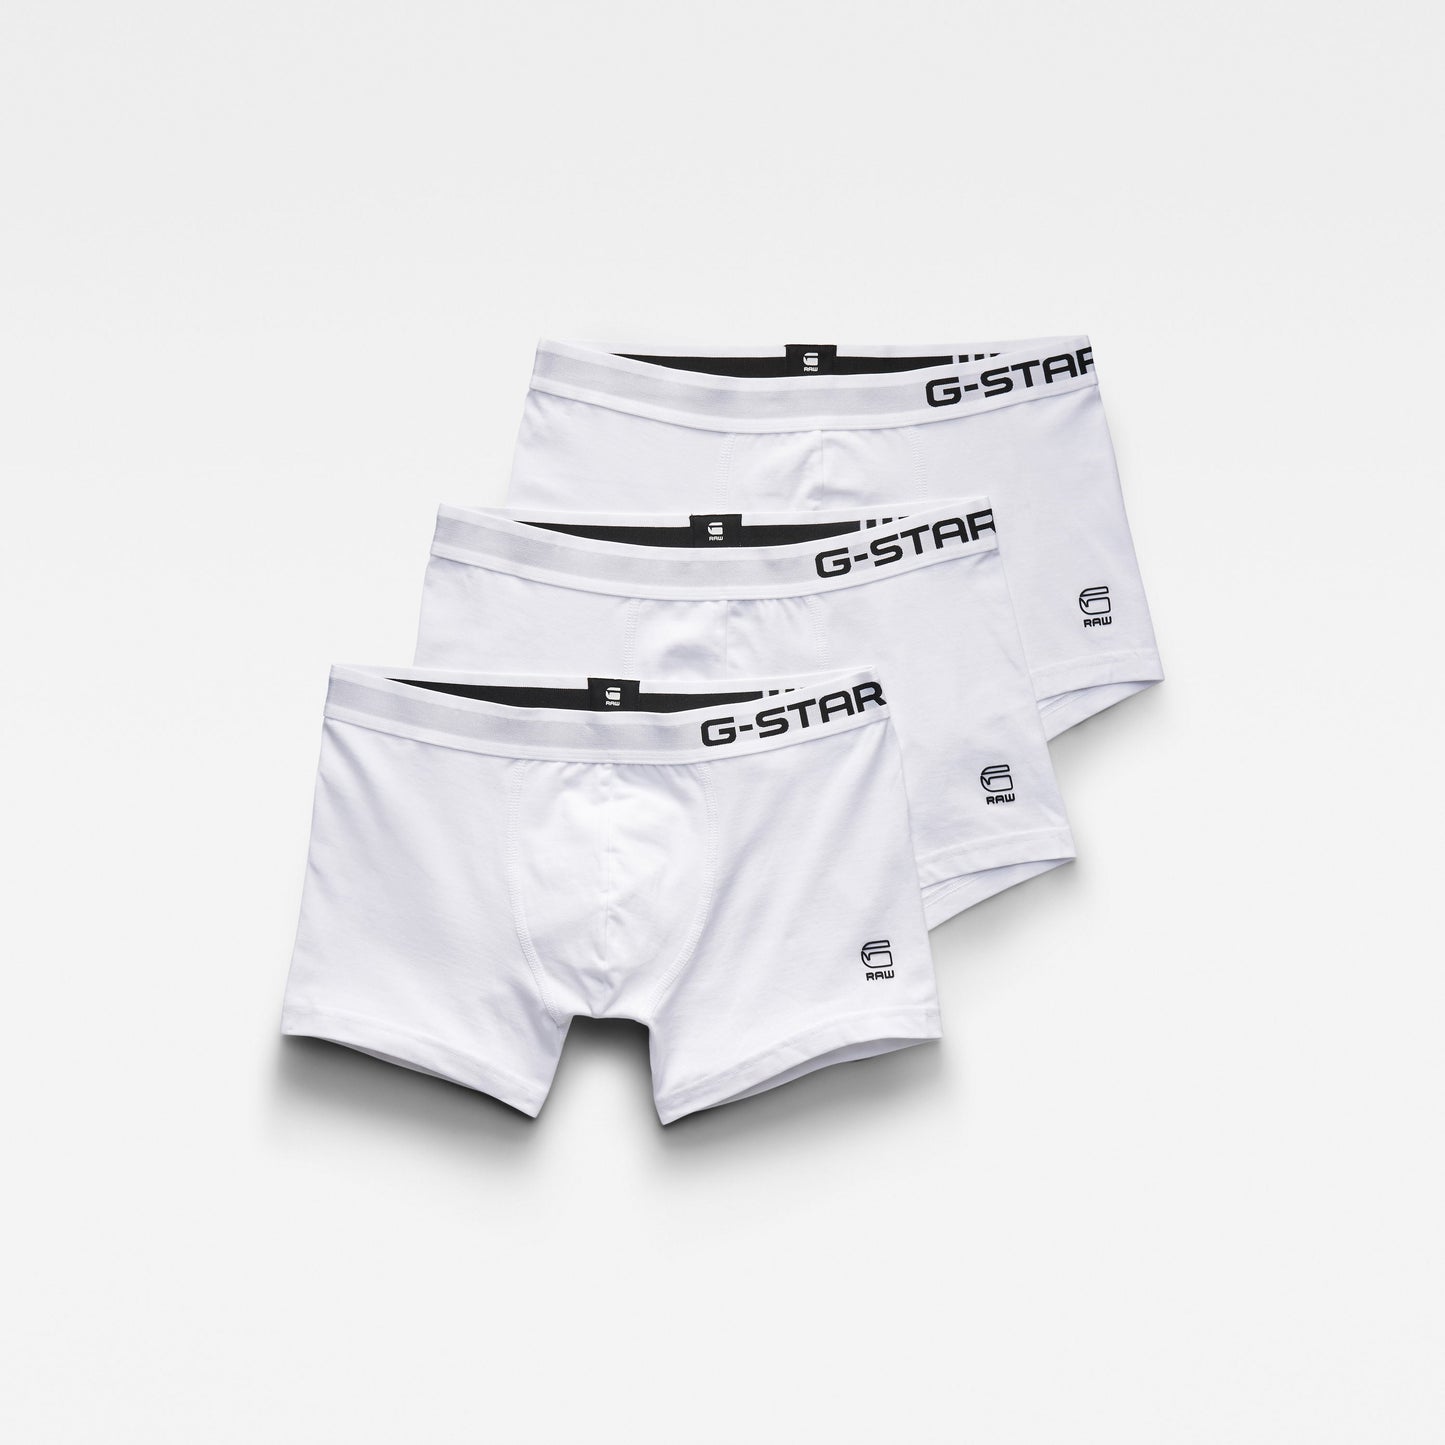 G-Star Classic White Boxer Shorts (3 Pack)